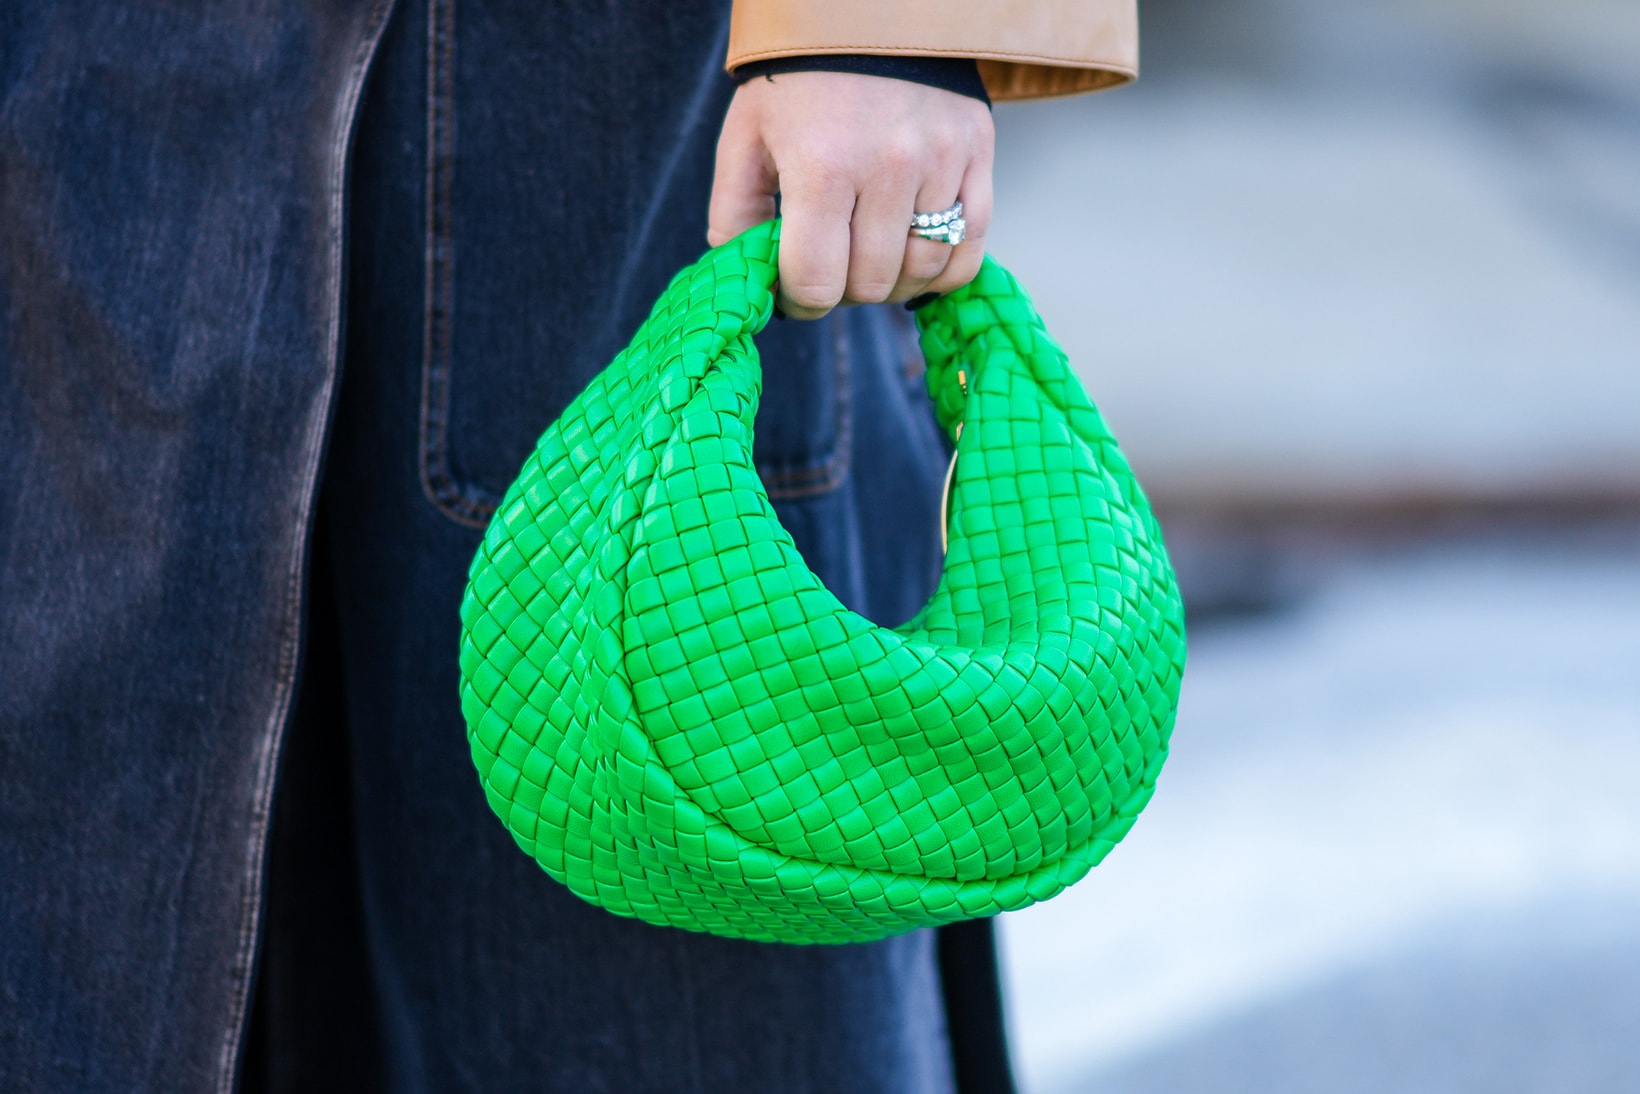 Bottega Veneta Matthieu Blazy Designer Bag Green 